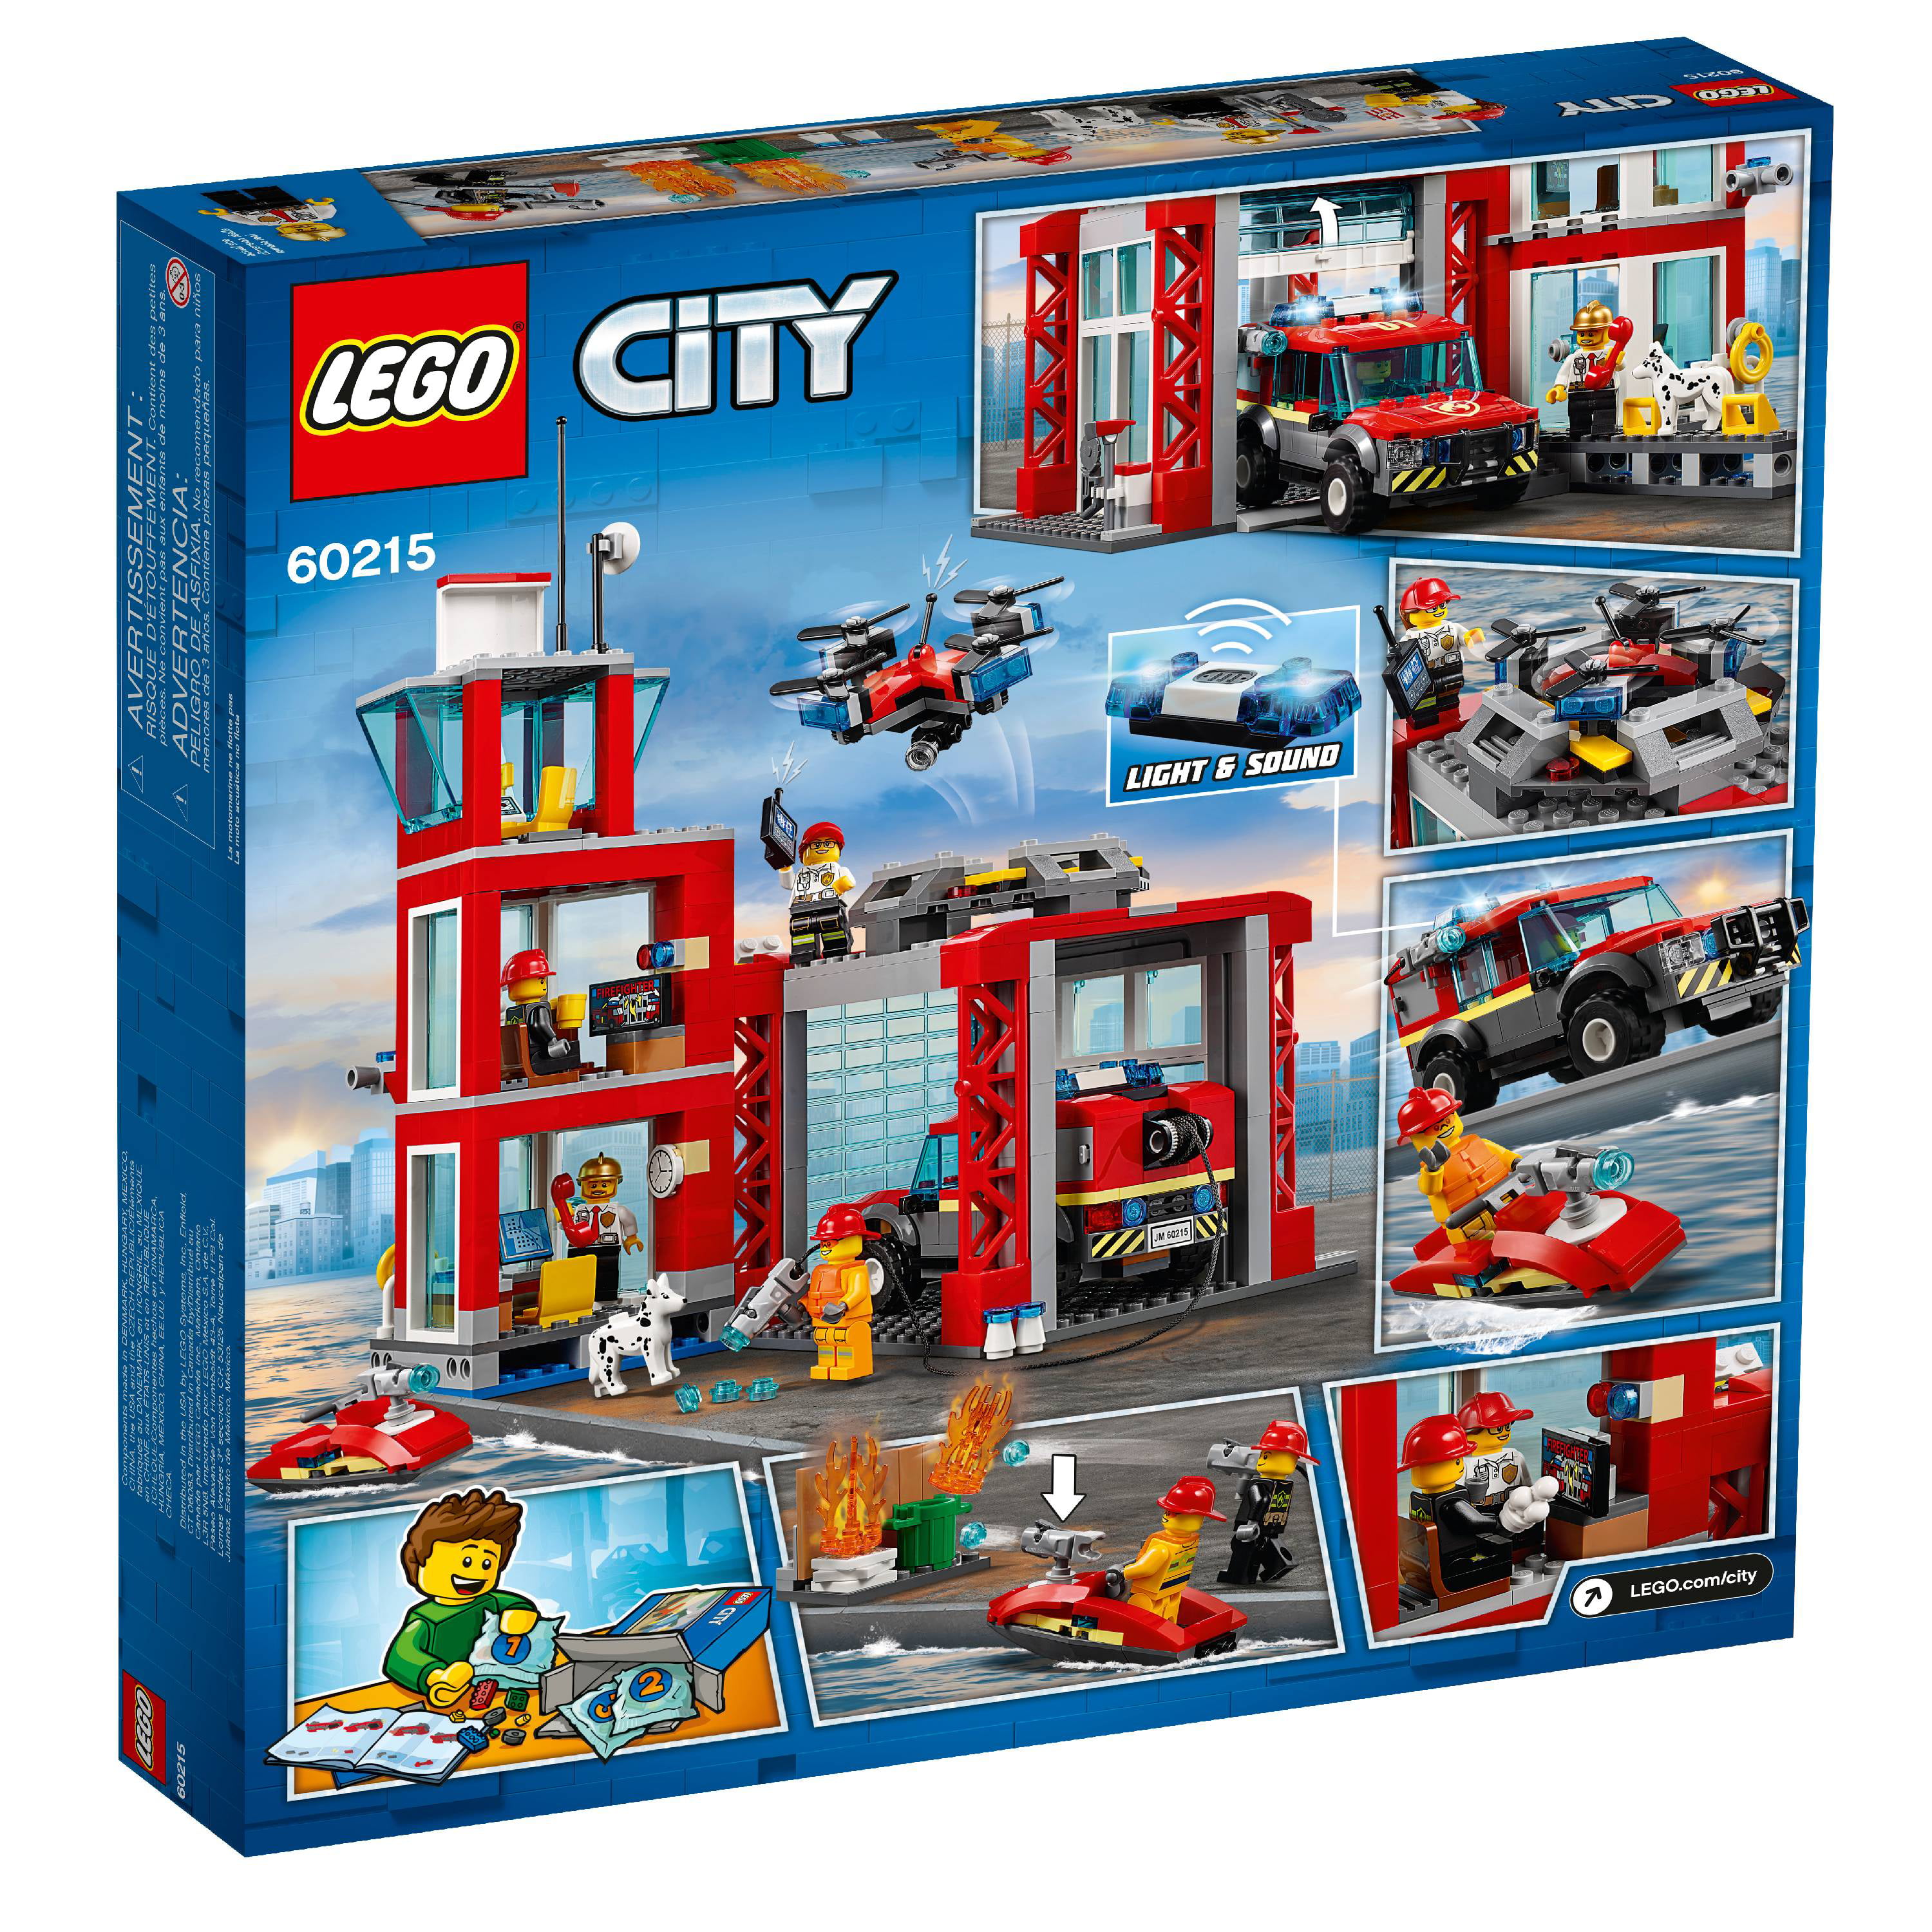 Blive gift låg kom sammen LEGO City Fire Fire Station 60215 Building Set (509 Pieces) - Walmart.com